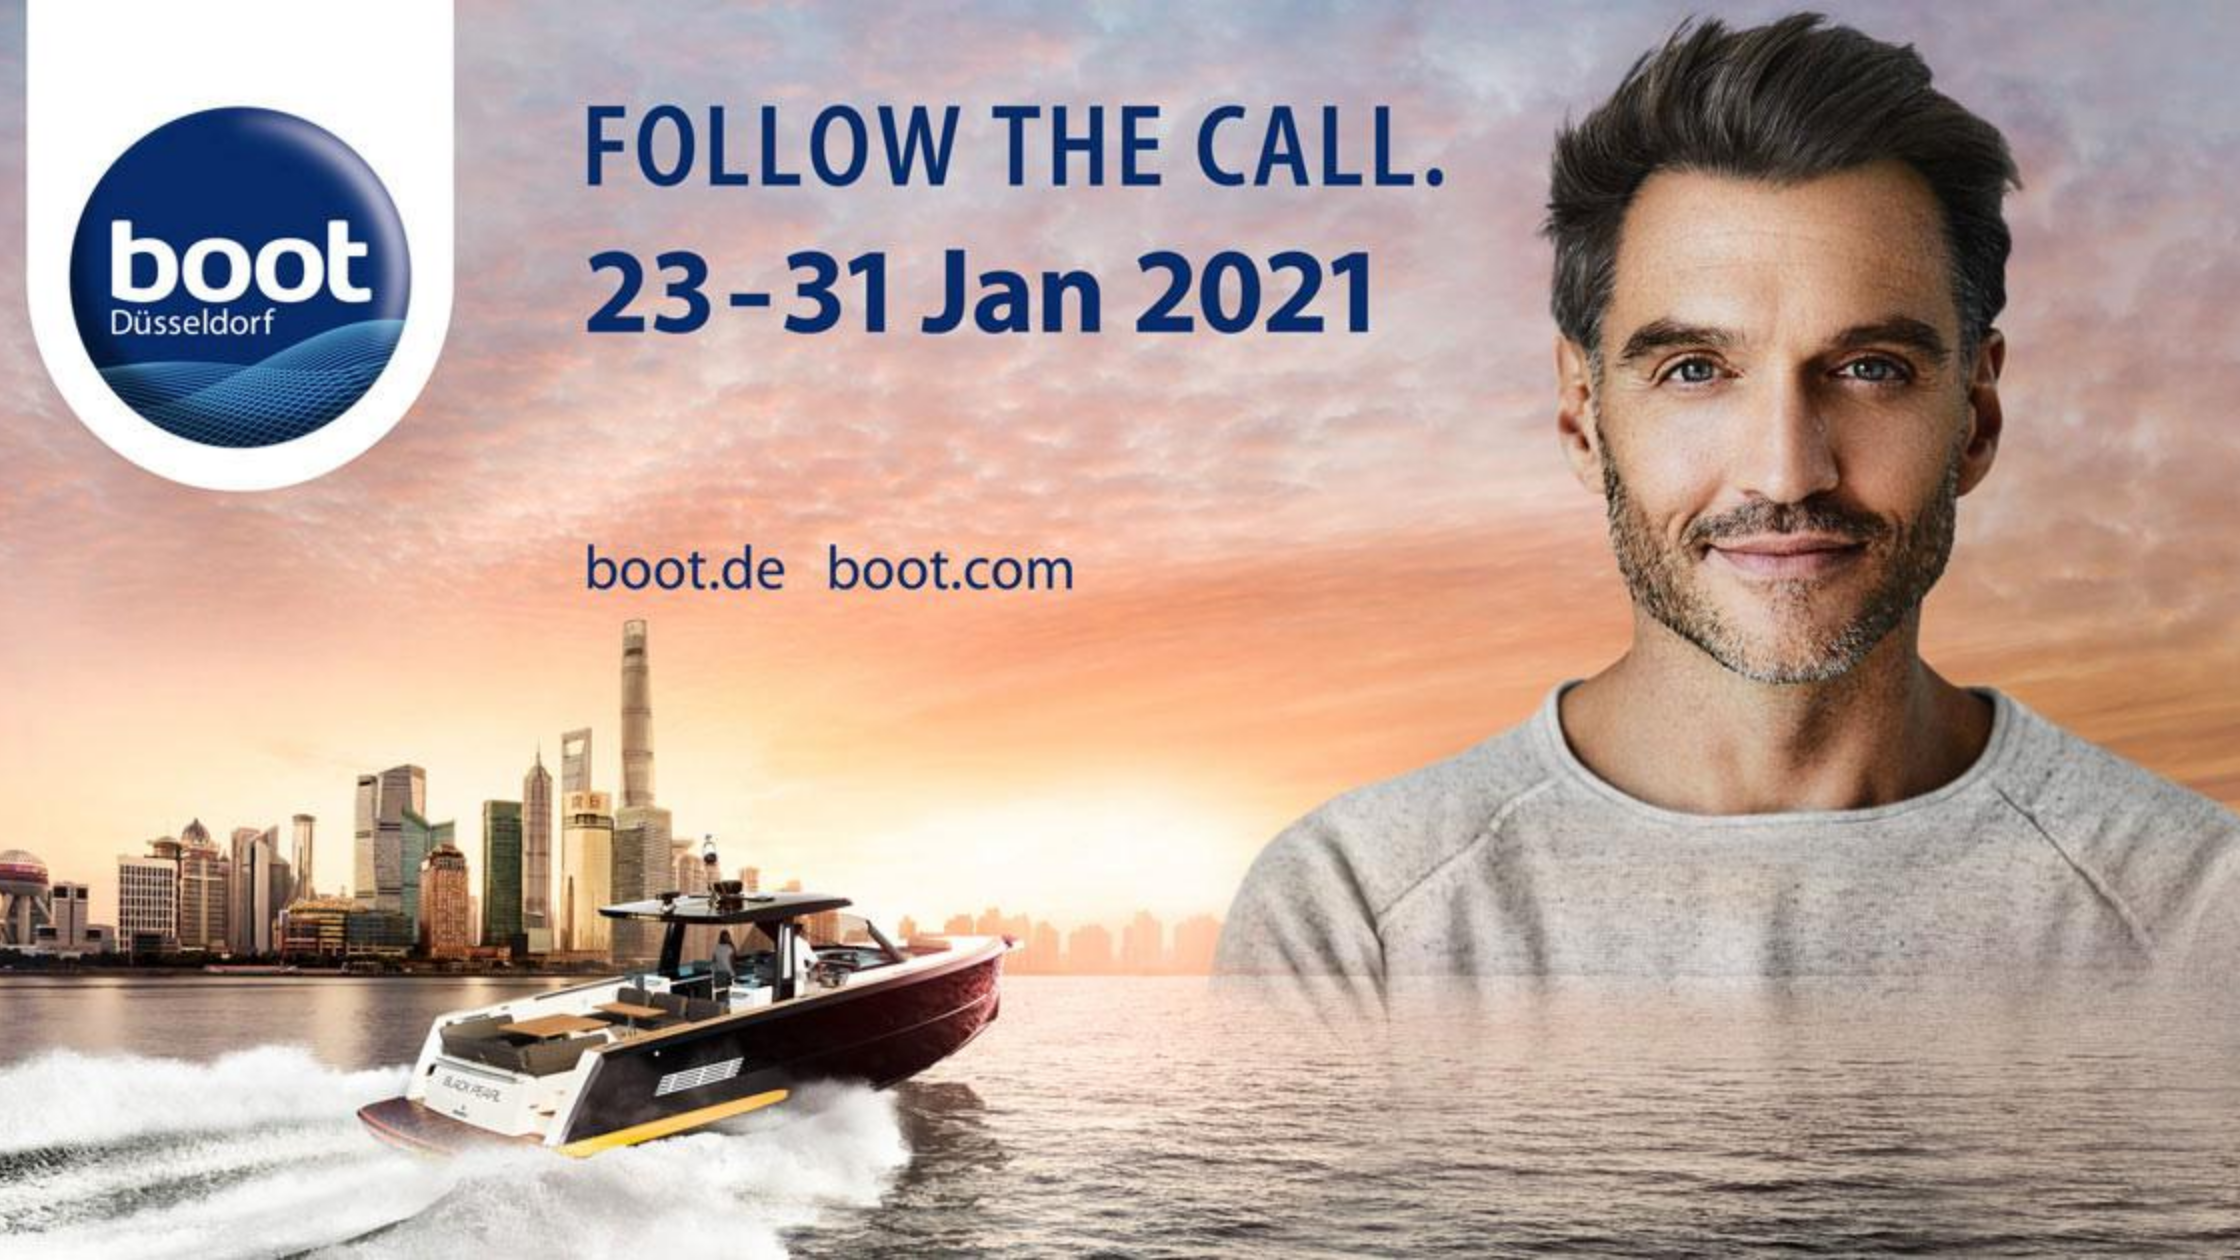 Salon Boot Dusseldord 23 - 31 janvier 2021 - Sundeck yachts - Bayliner